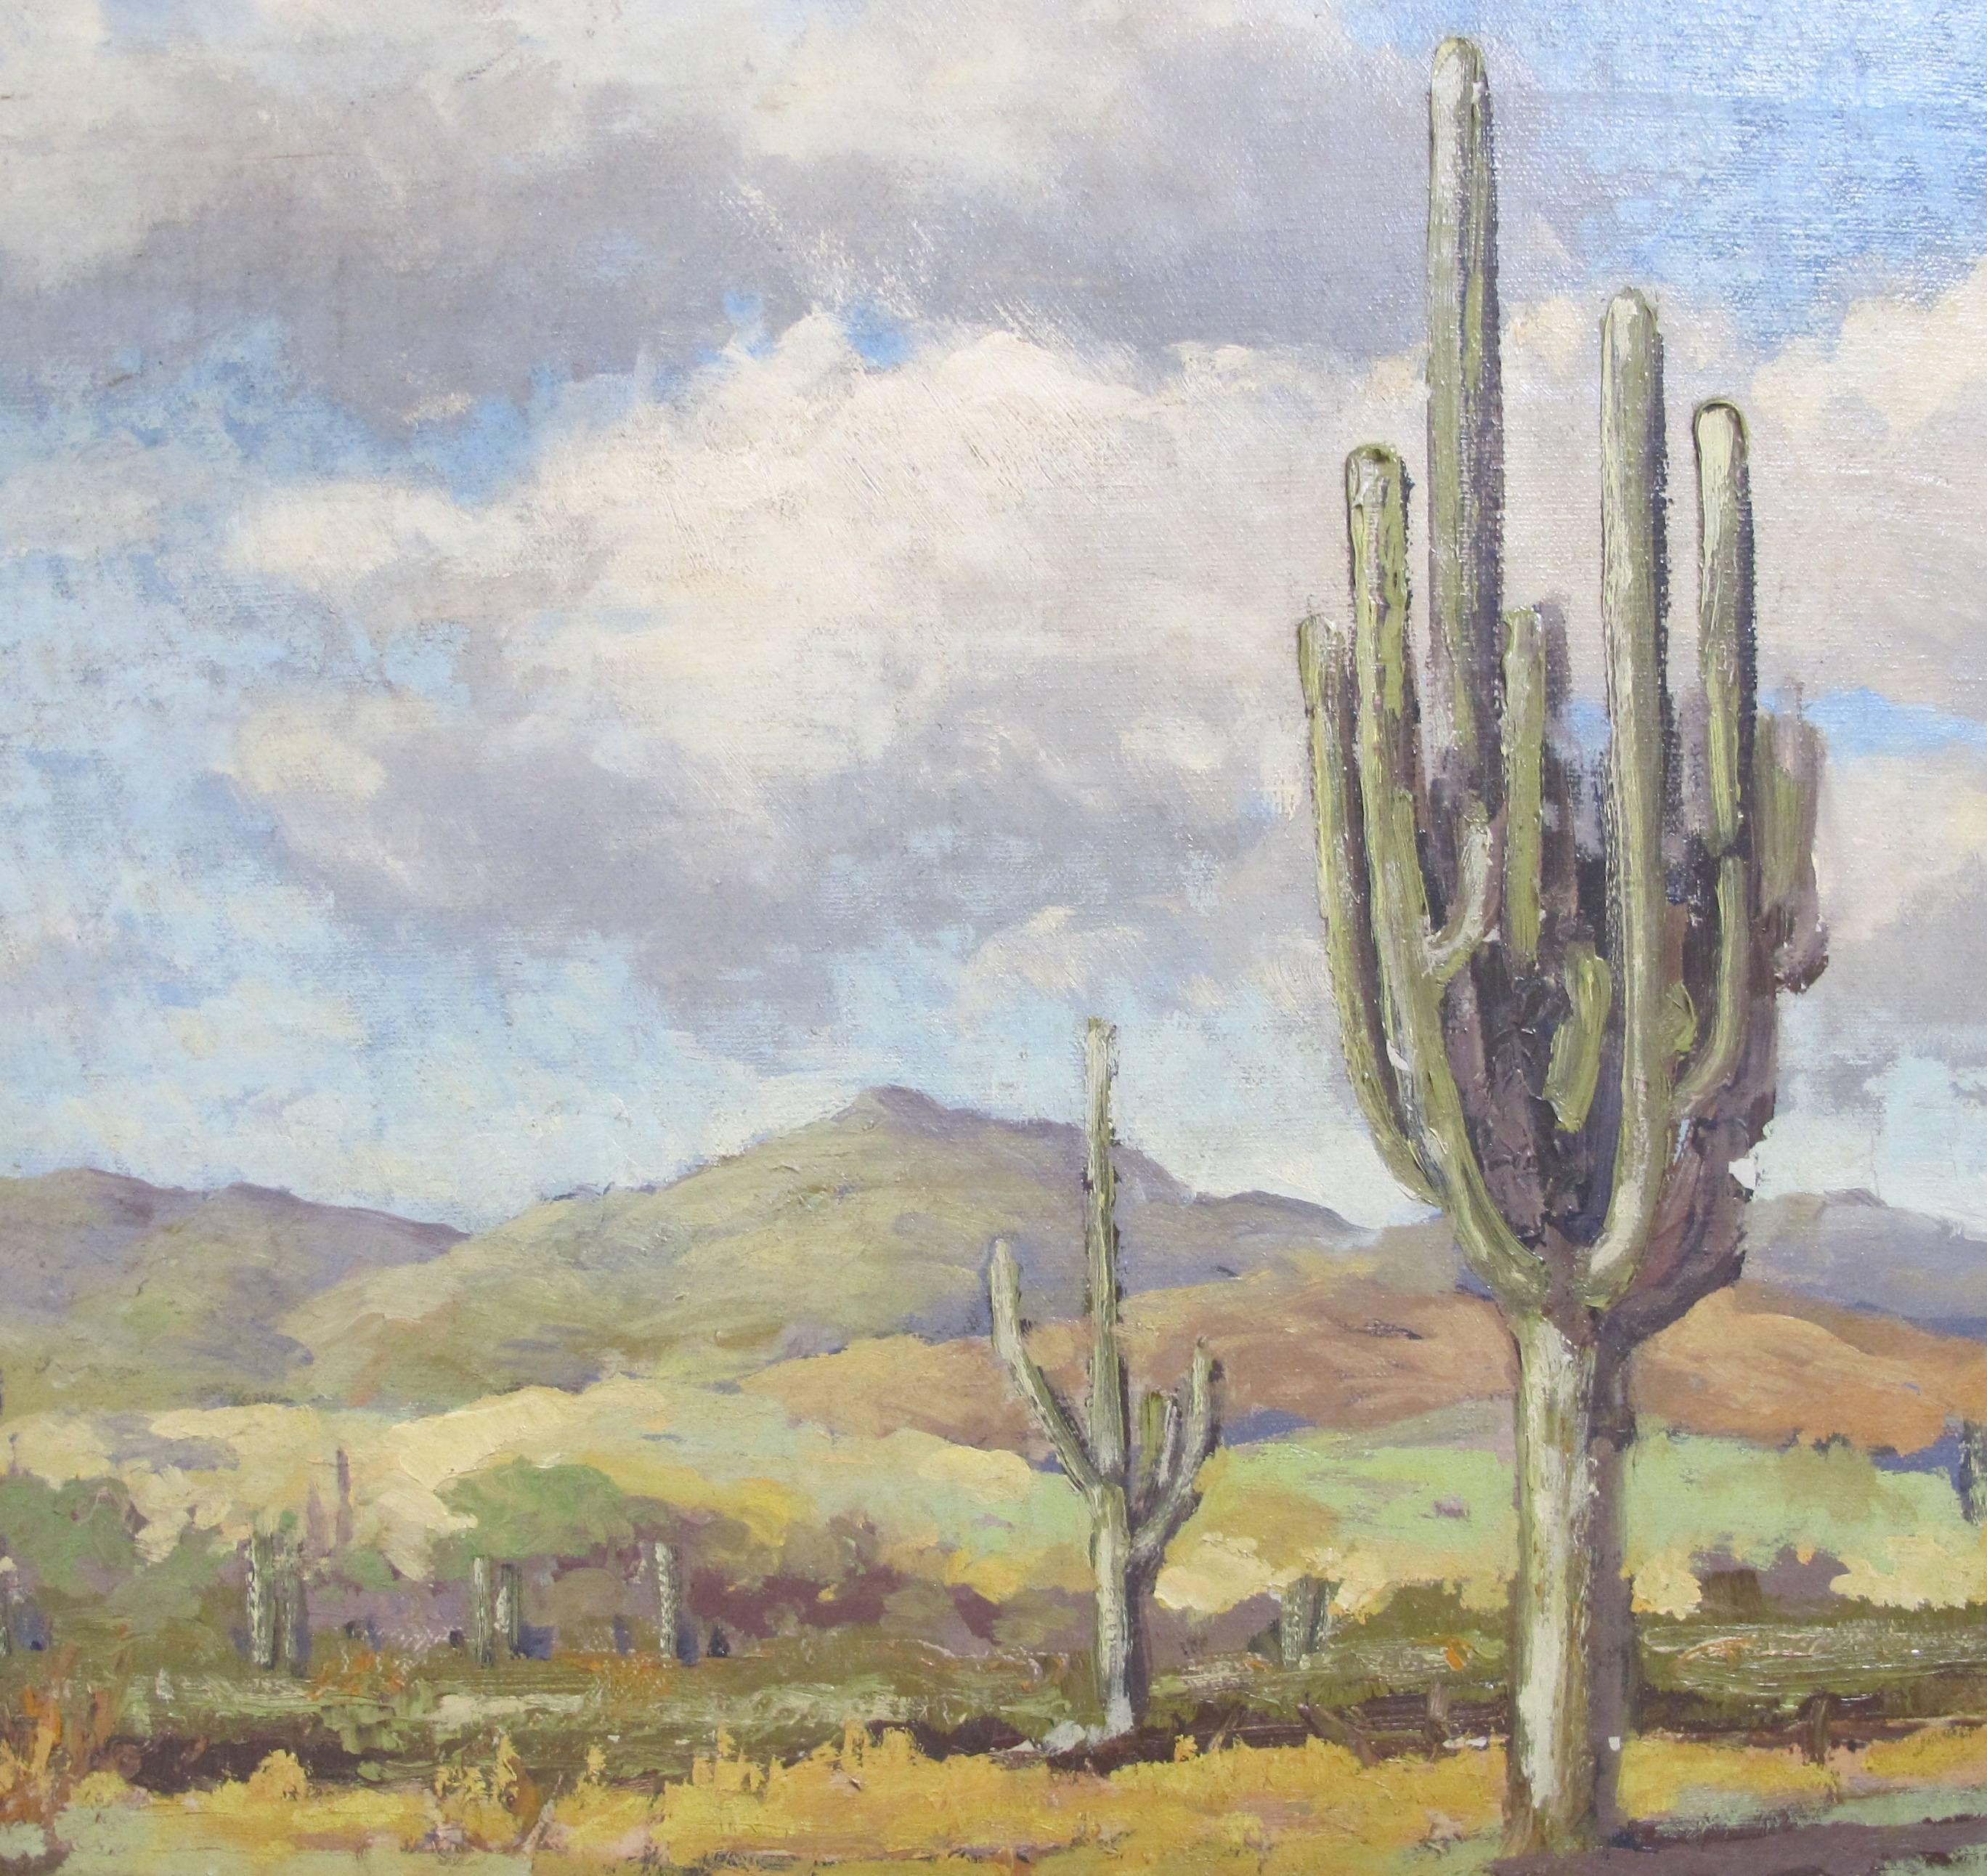 South West Desert Landscape Painting by Frank Sanford 1